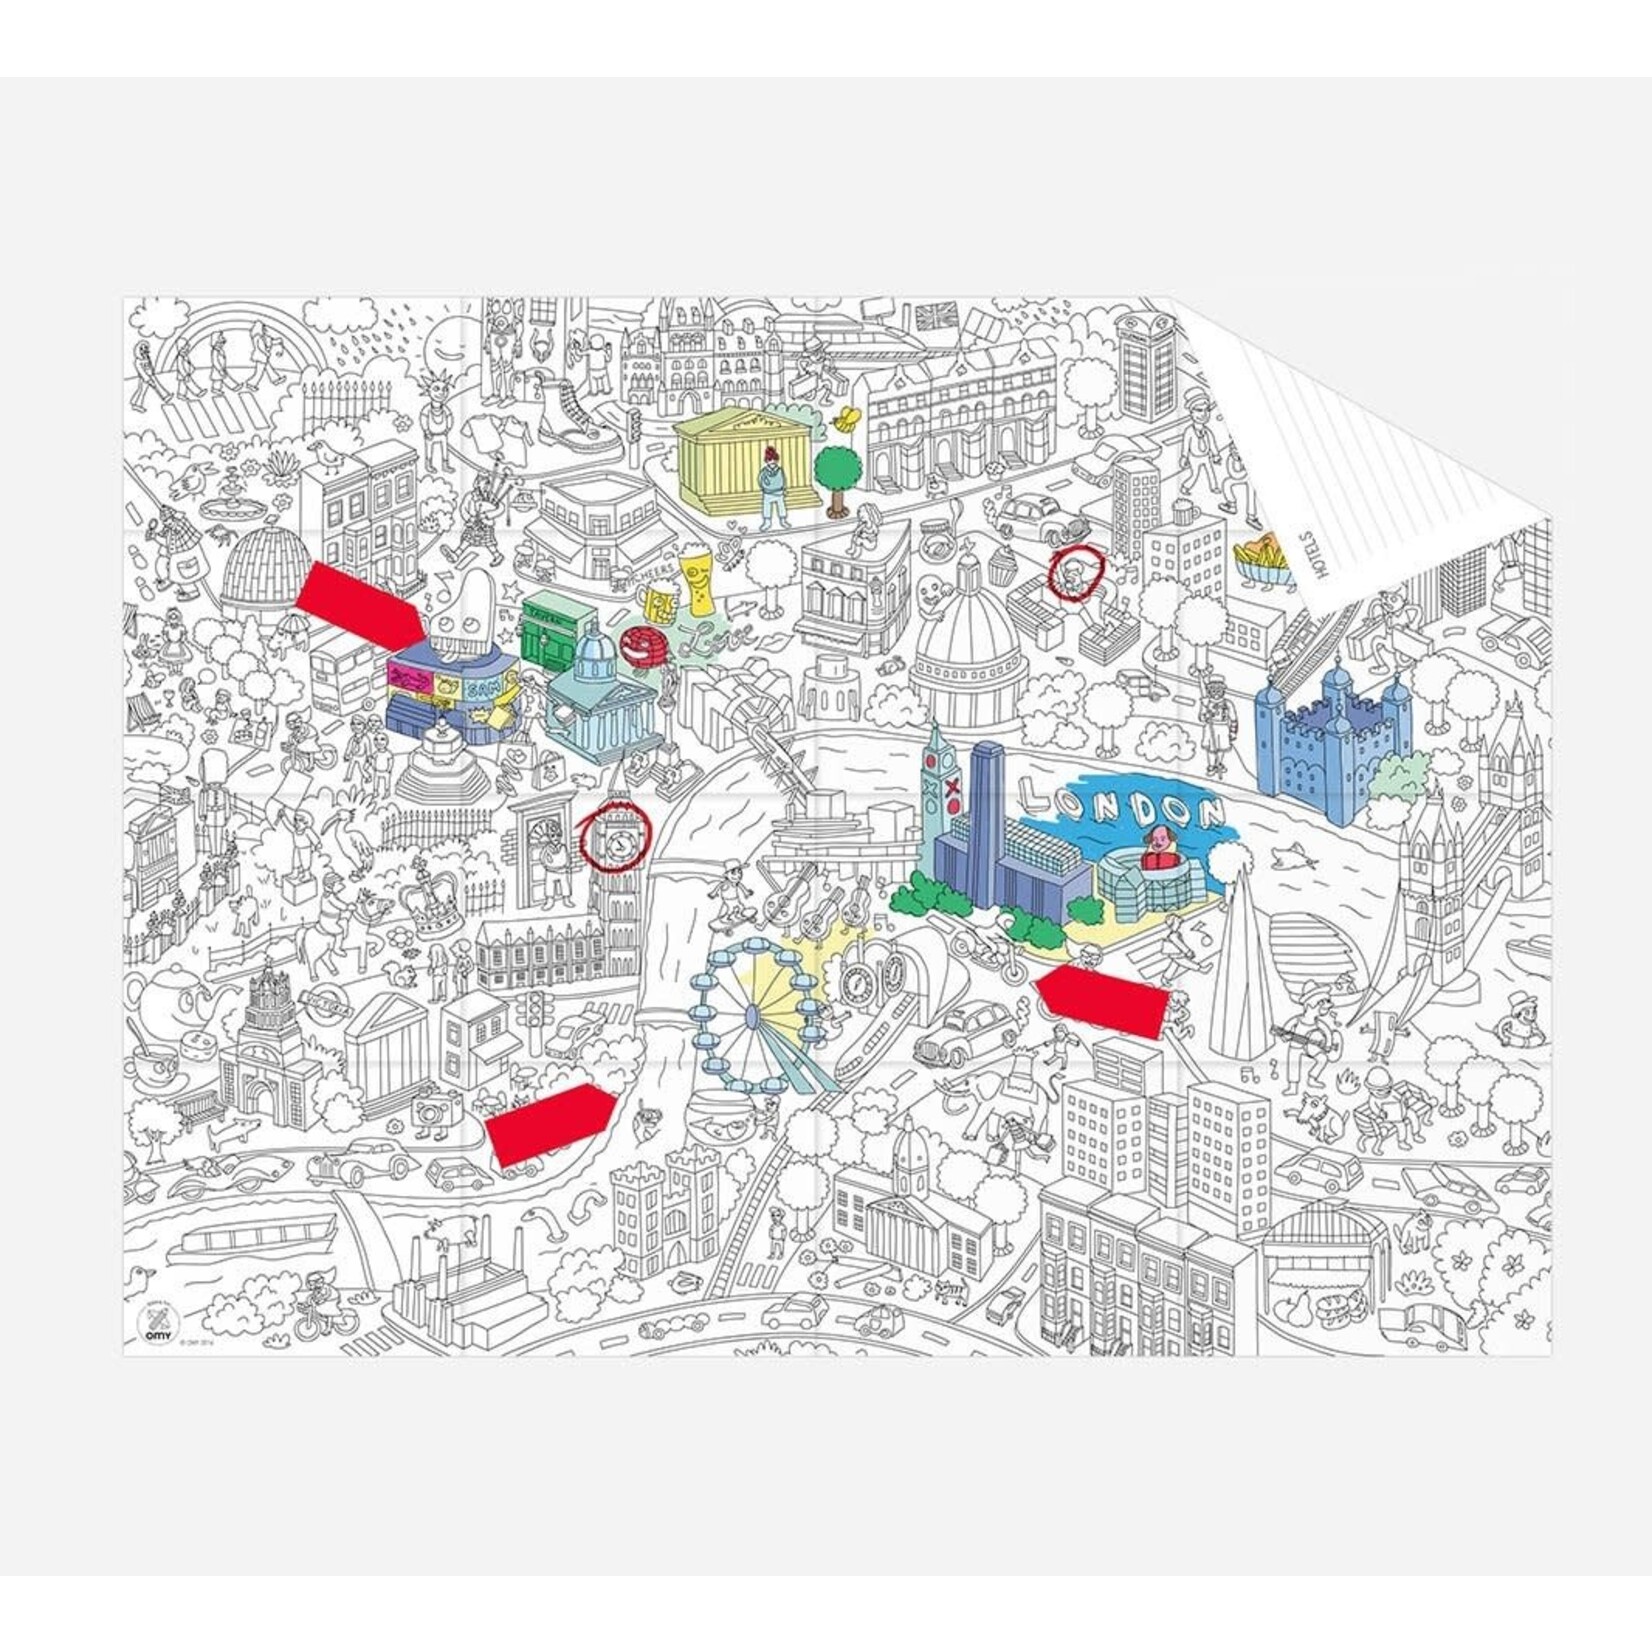 Omy Plan Londres à Colorier + 12 Memo Stickers Pocket Maps